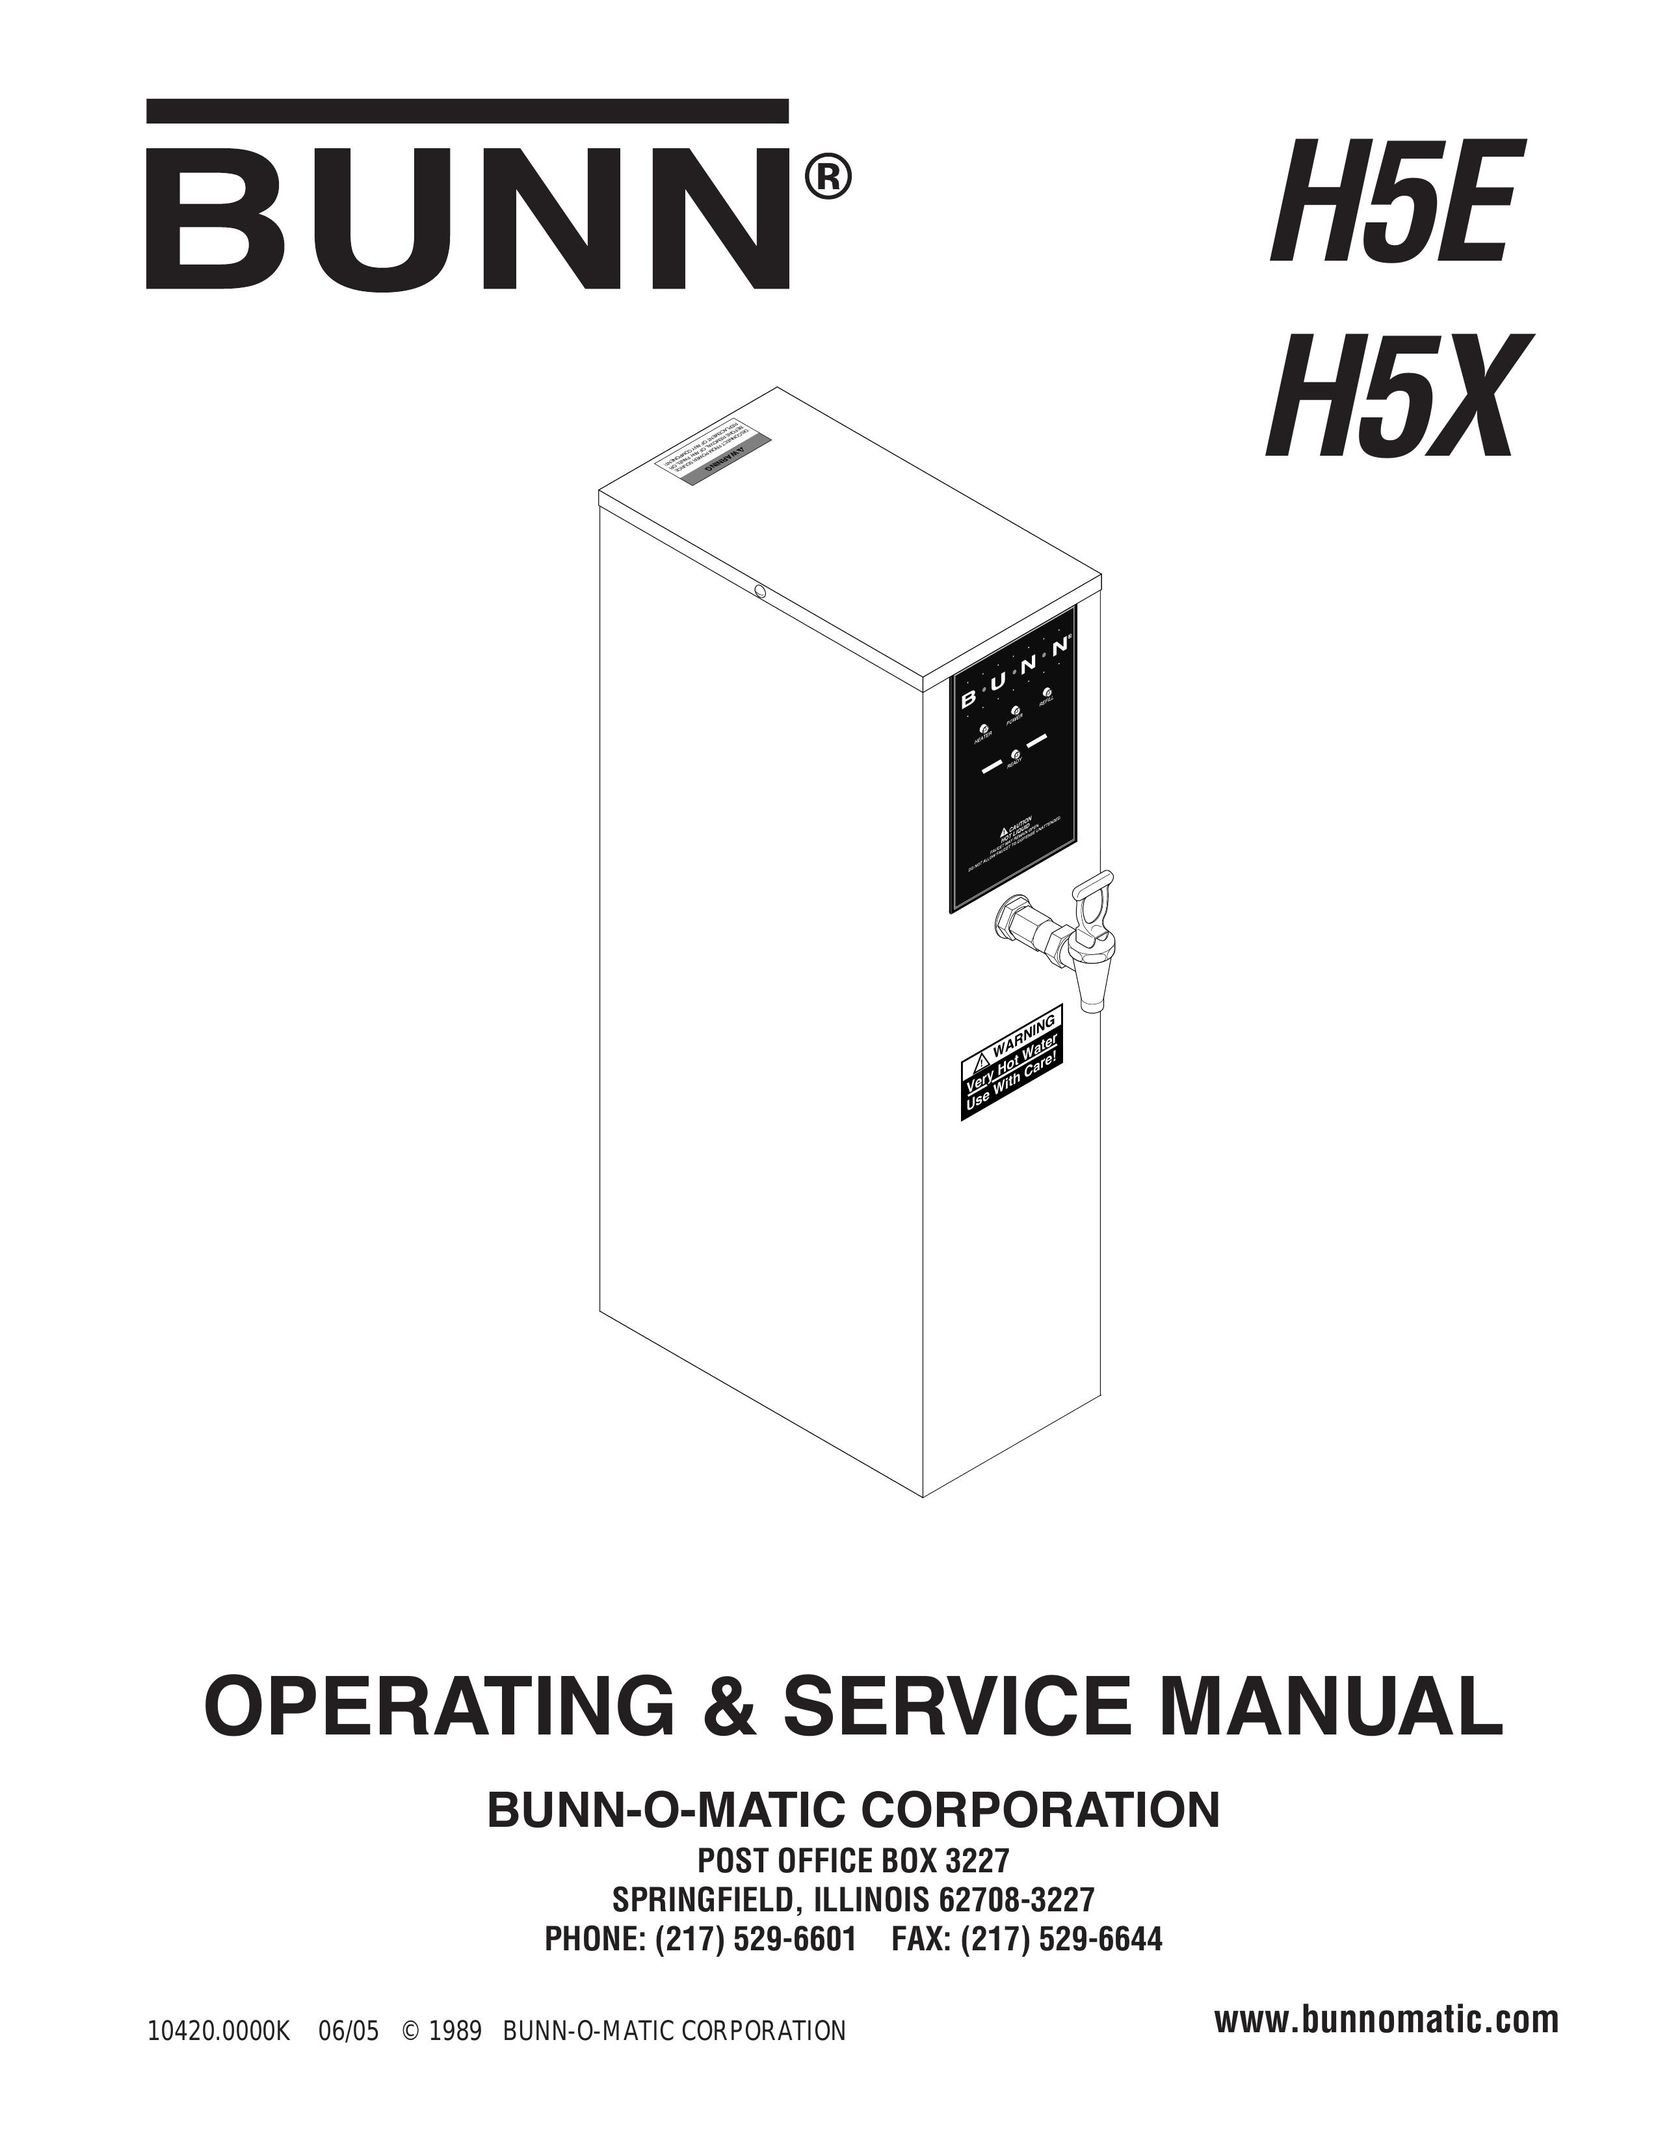 Bunn H5E Water Heater User Manual